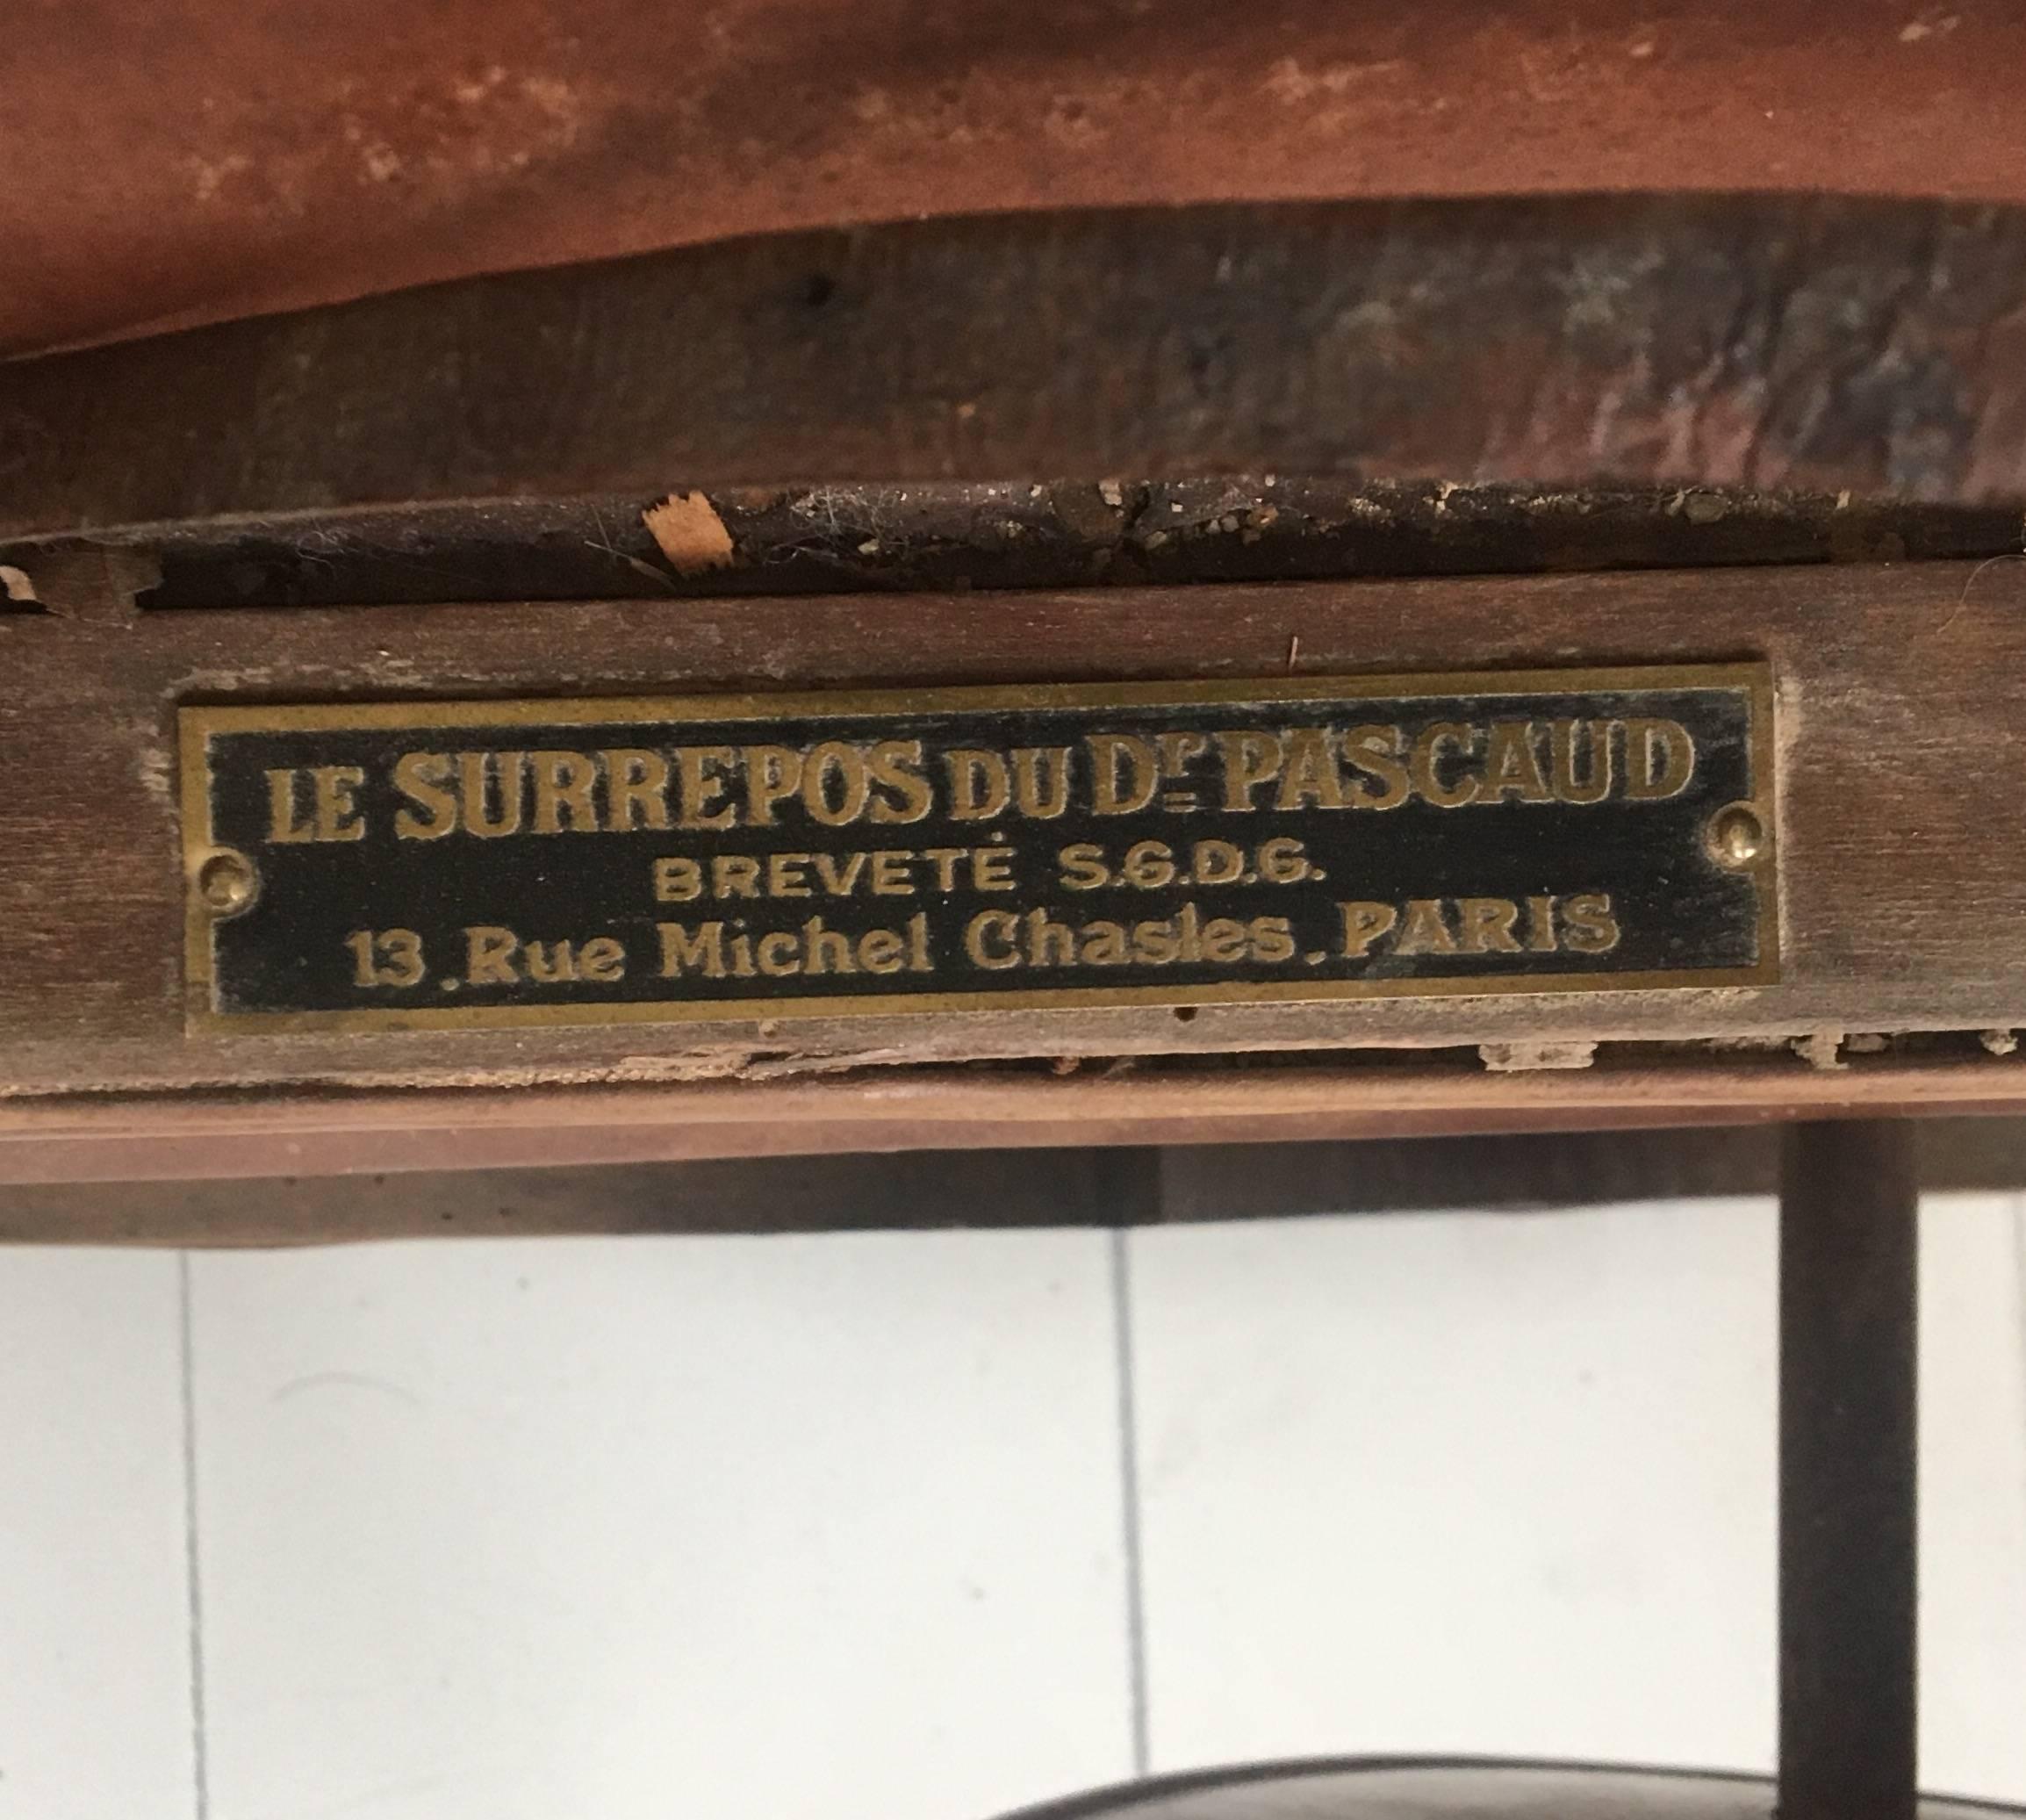 Seltener brauner antiker Loungesessel 'Le Surrepos Du Dr. Pascaud' Paris, um 1924 (Buchenholz) im Angebot